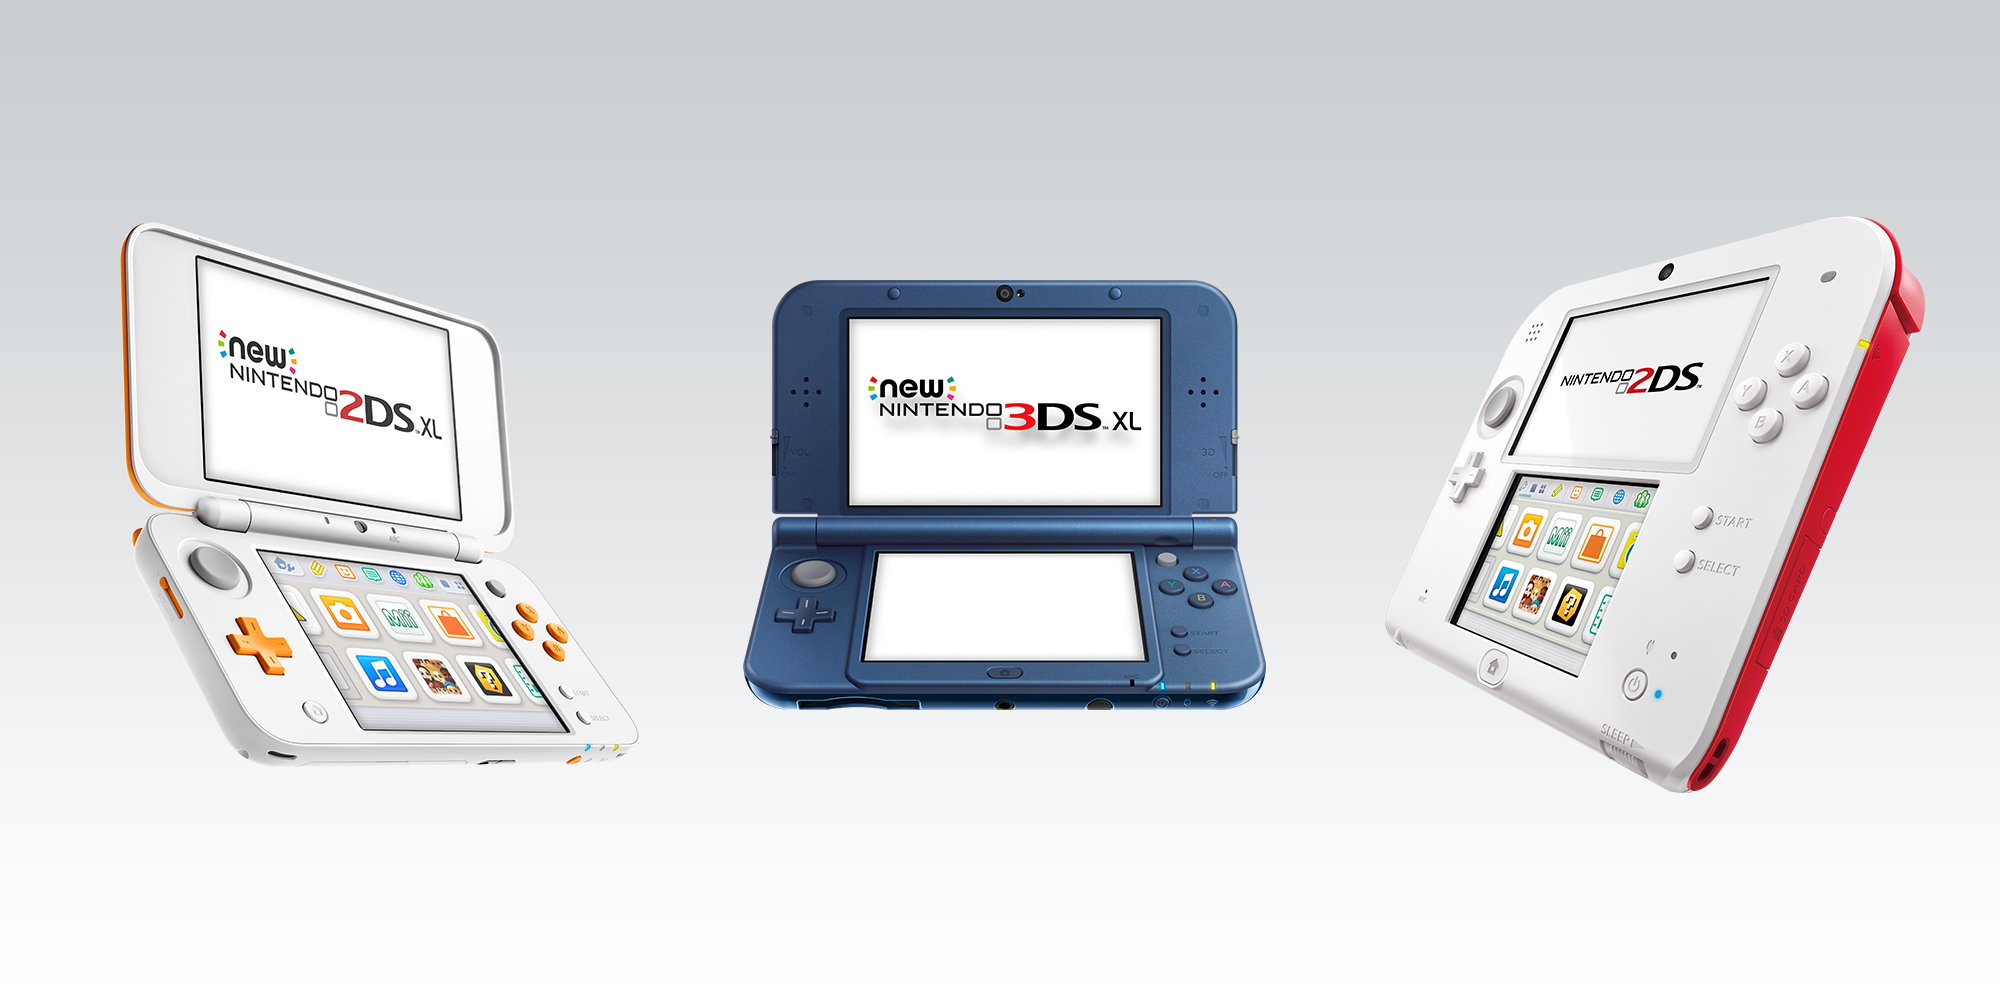 Nintendo 3DS Family | Hardware | Nintendo